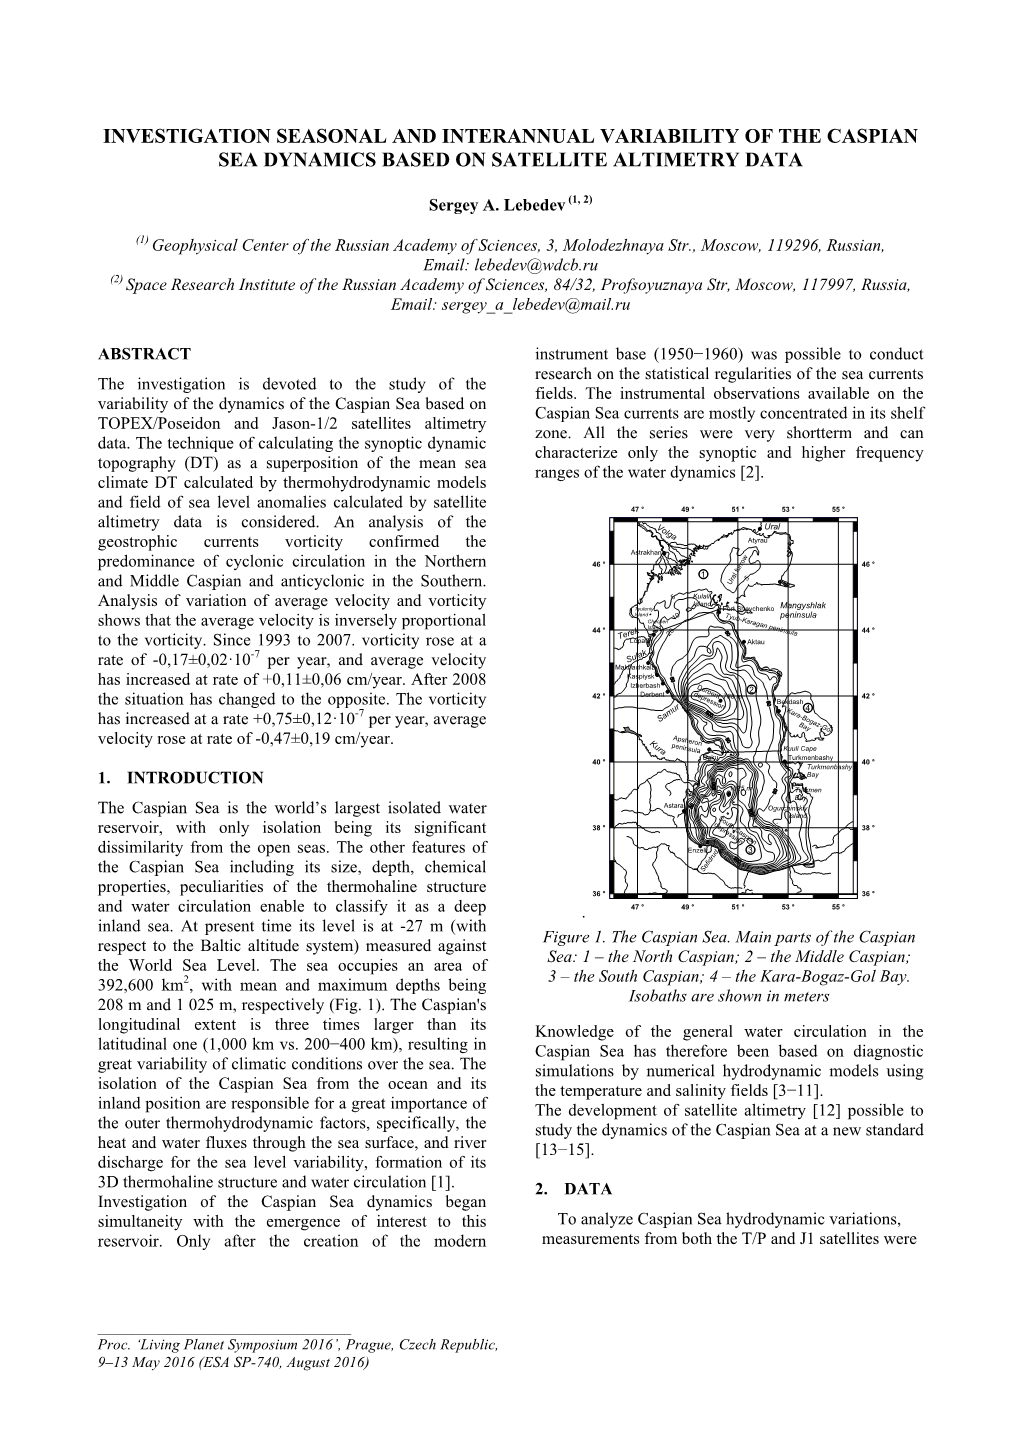 Investigation Seasonal and Interannual Variability of the Caspian Sea Dynamics Based on Satellite Altimetry Data